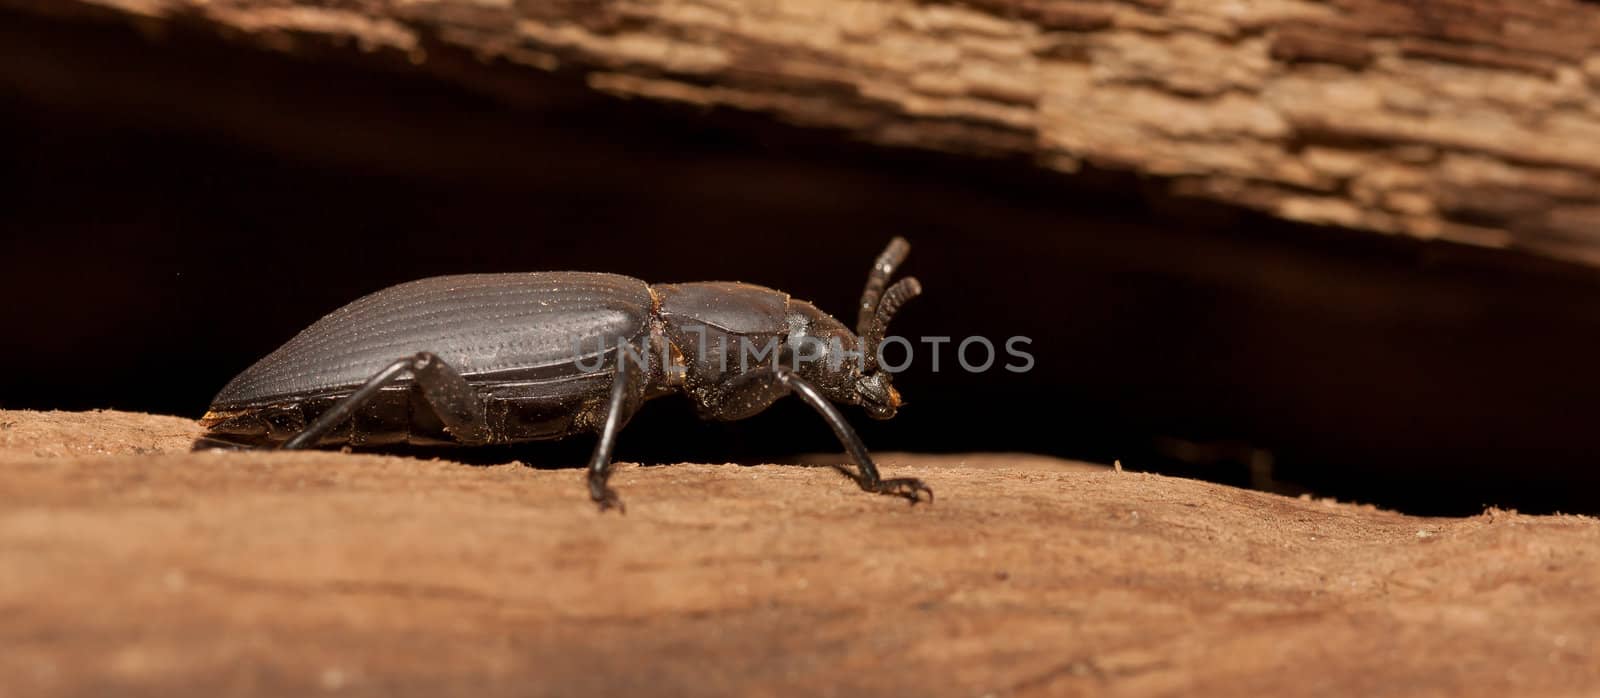 A black beetle by michaklootwijk